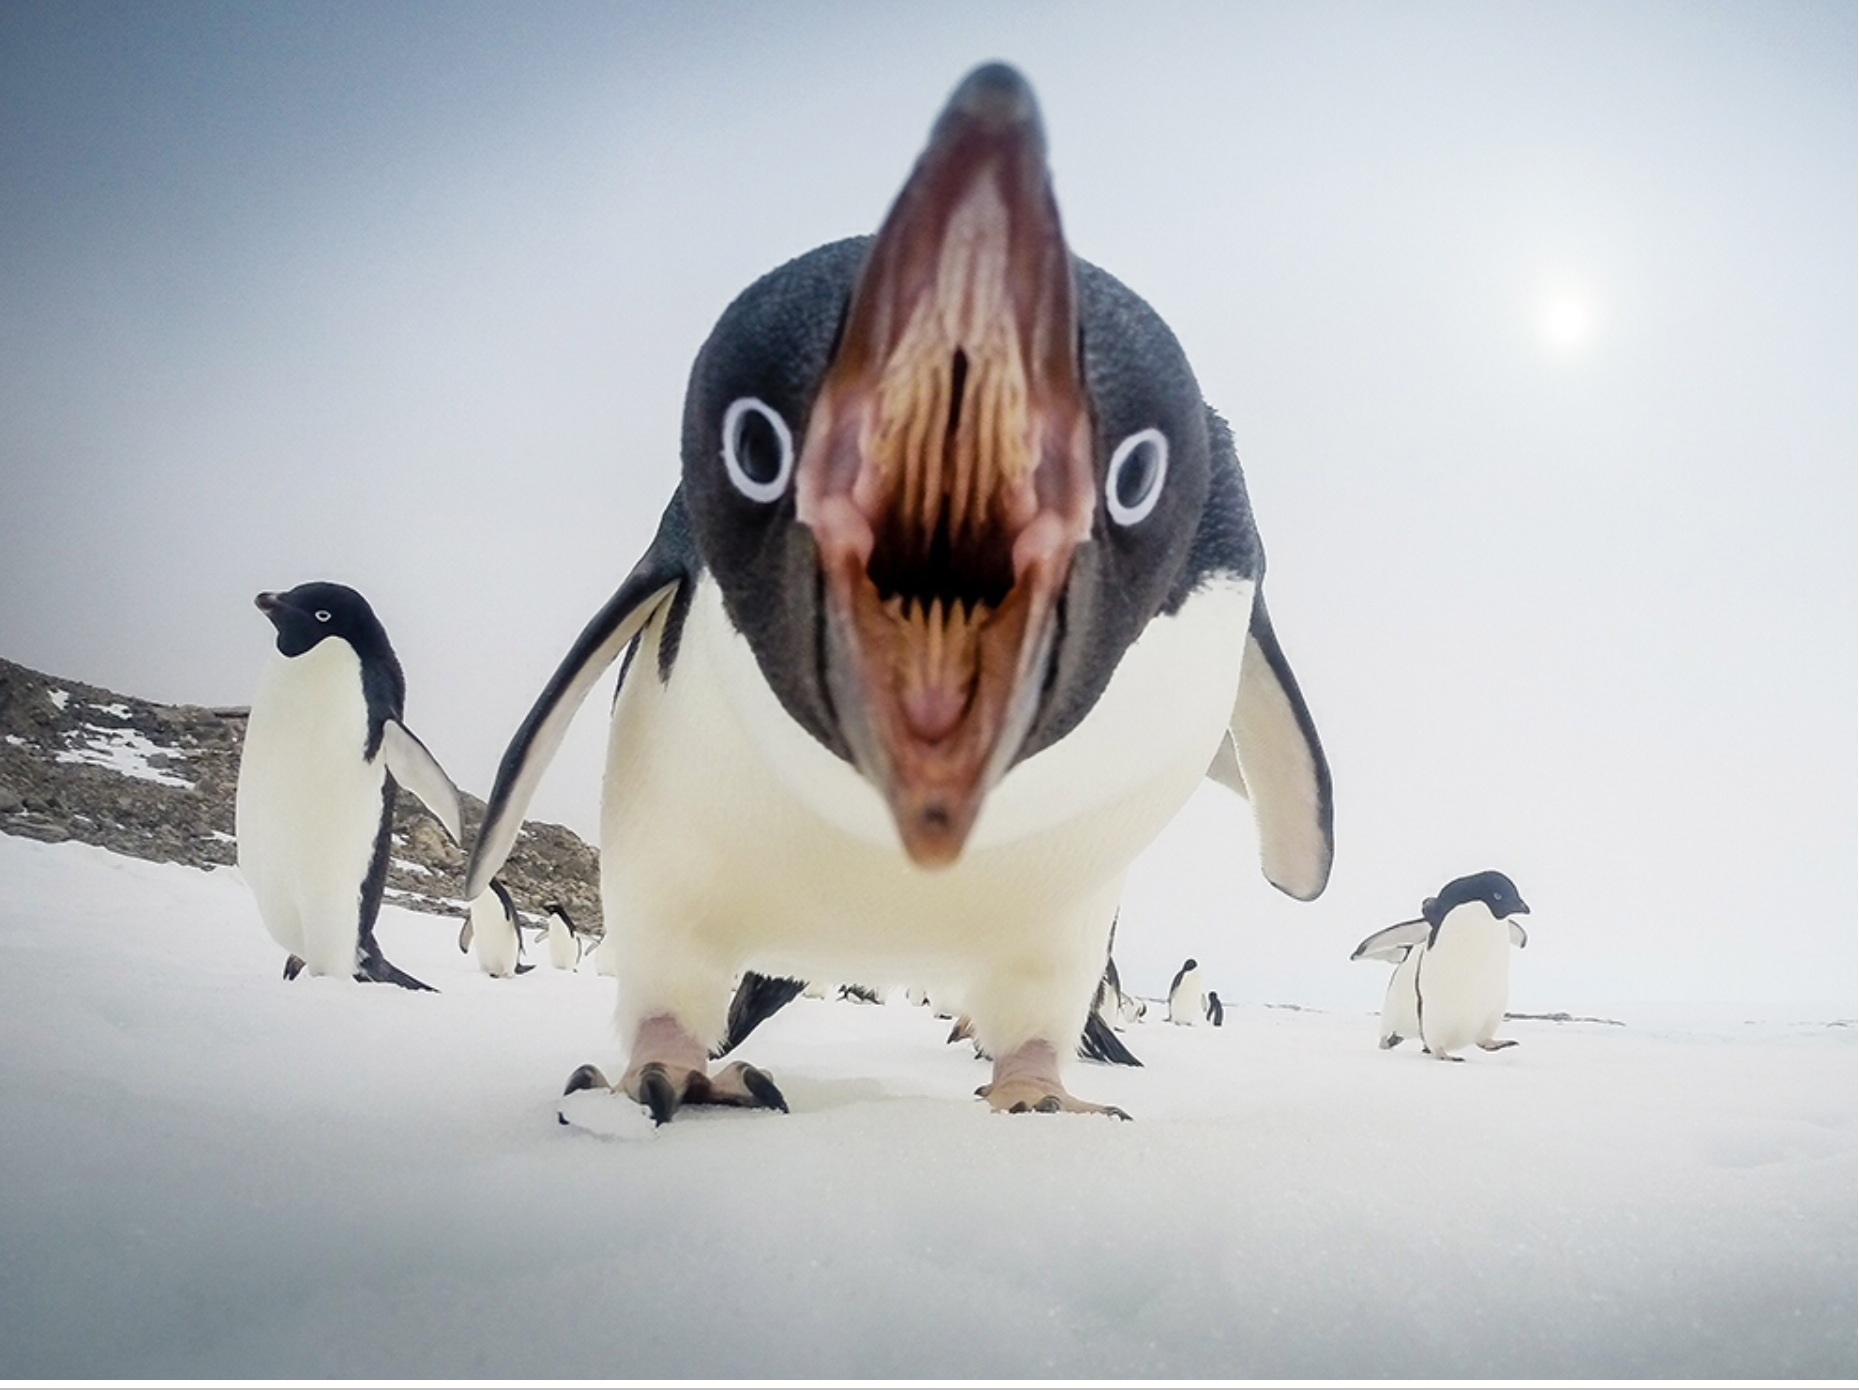 Penguin's beak